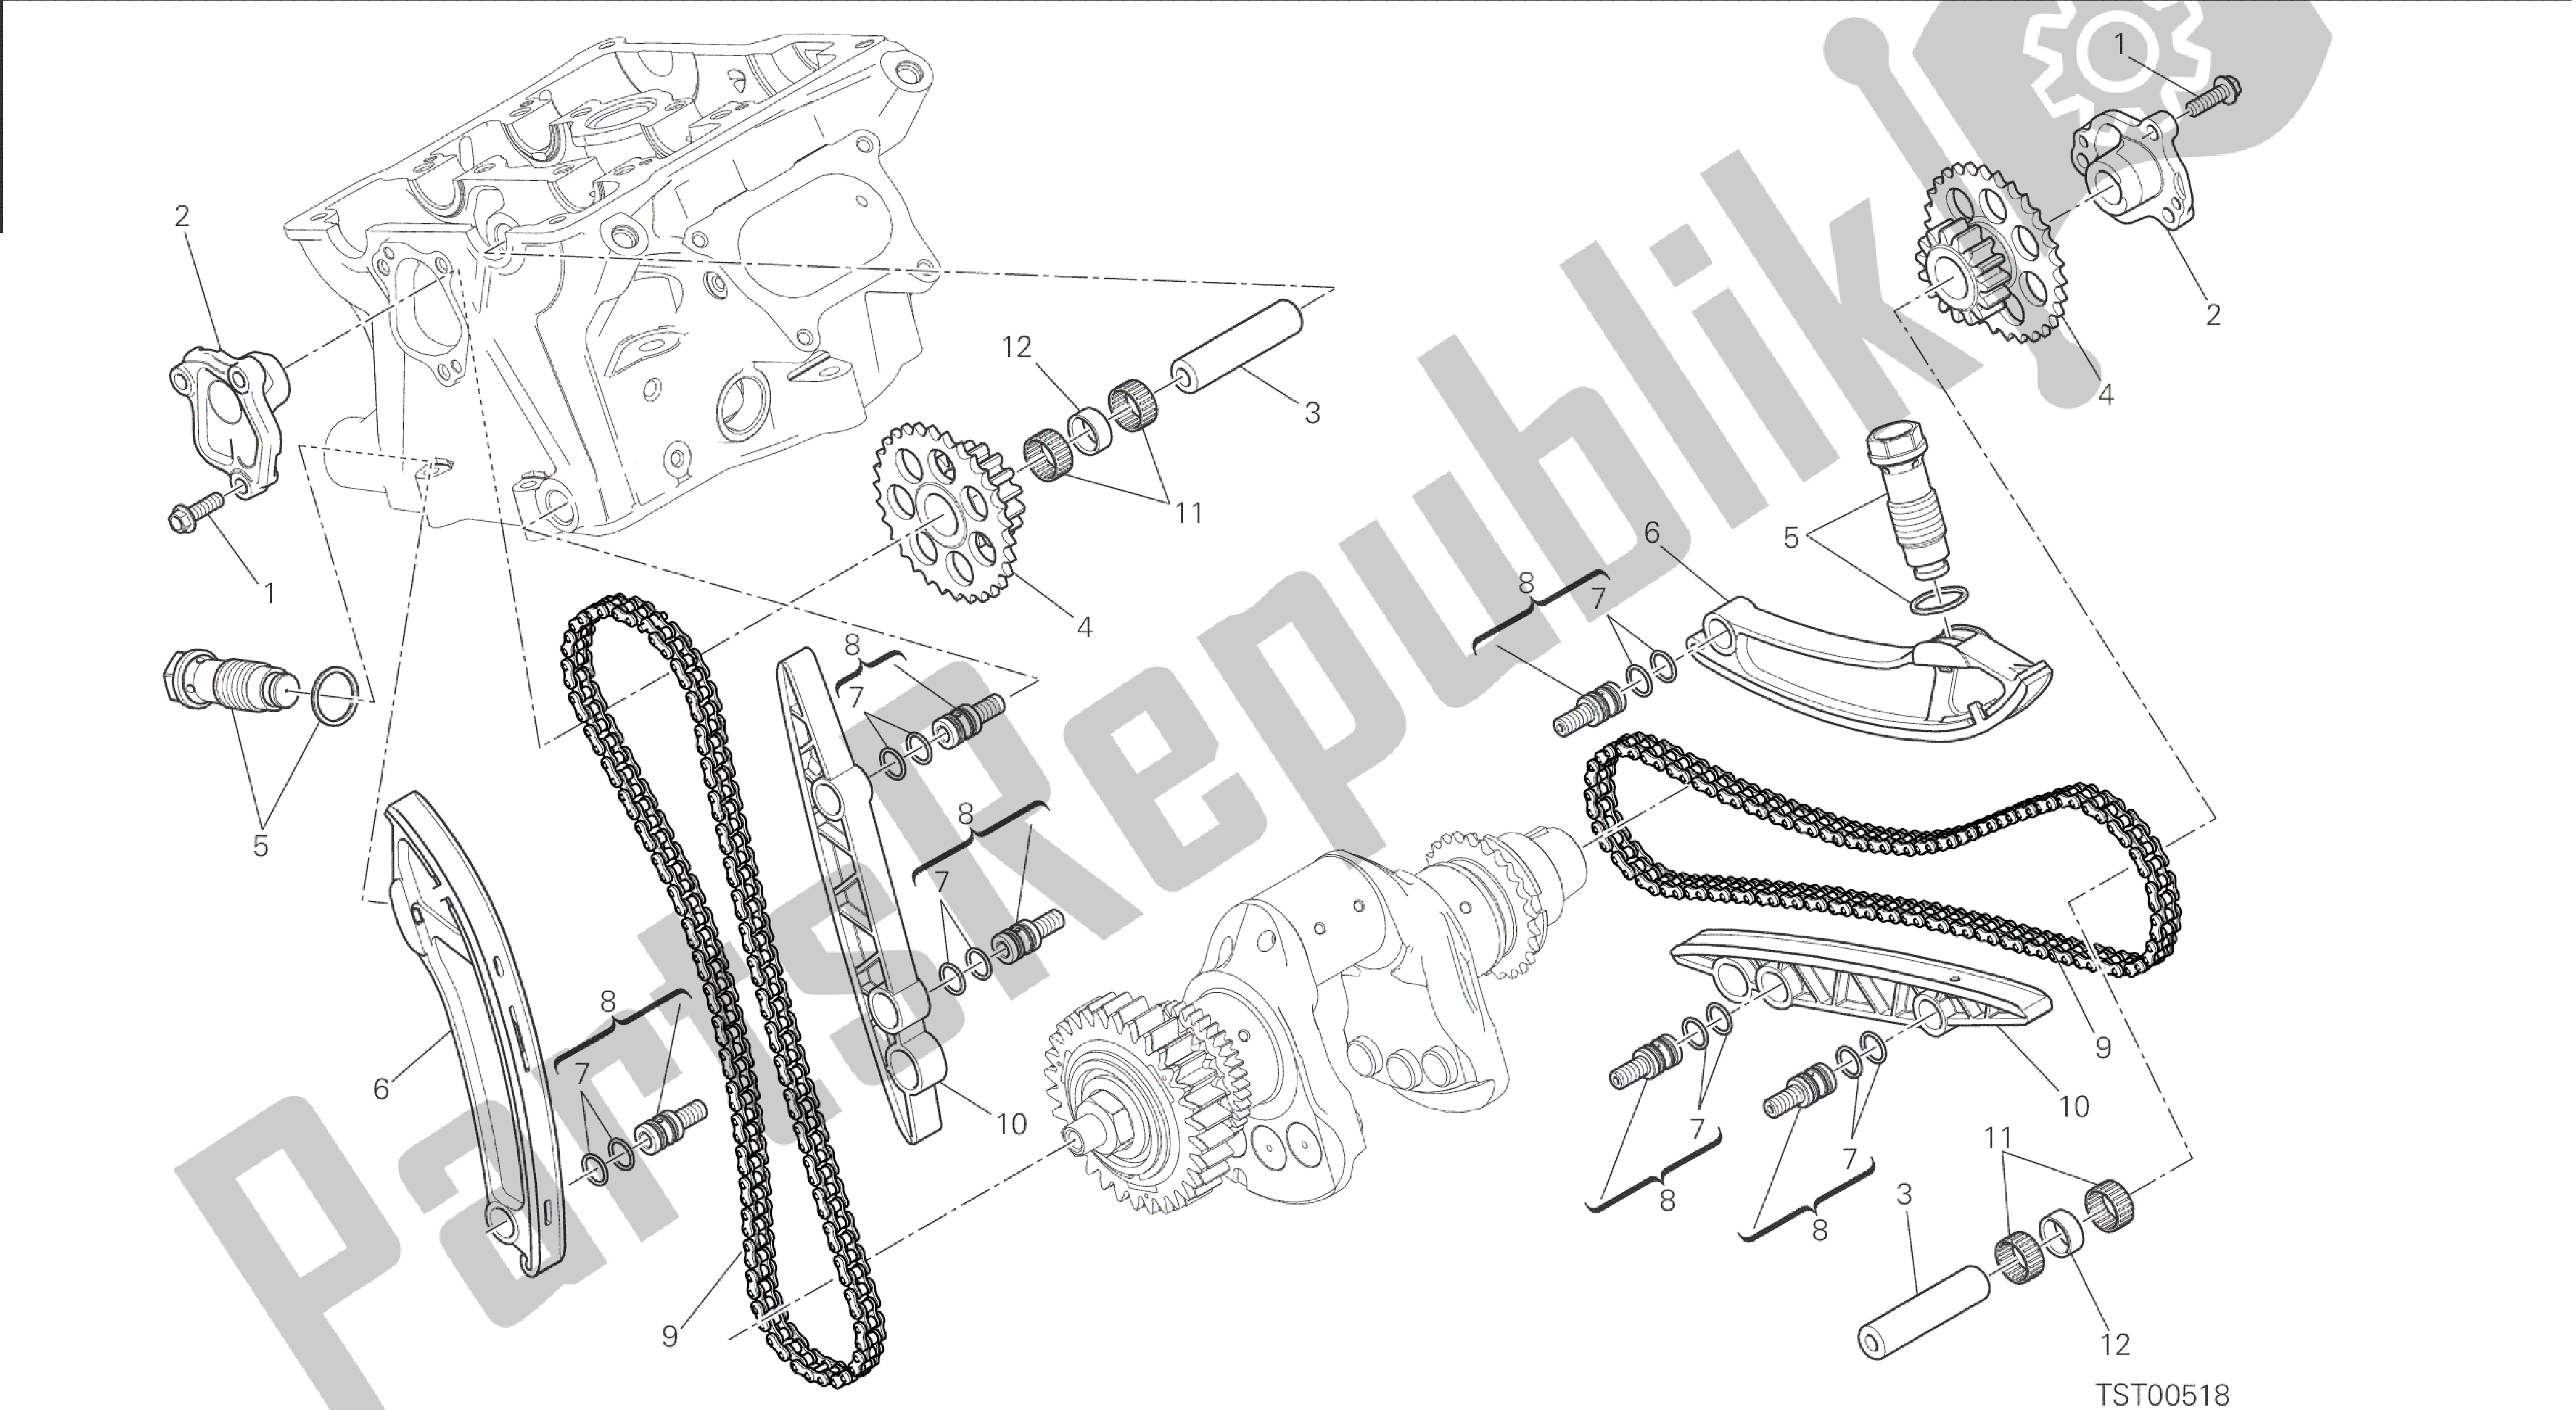 Alle onderdelen voor de Tekening 008 - Distribuzione [mod: 1199 R; Xst: Aus, Eur, Fra, Jap, Twn] Groep Engine van de Ducati Panigale 1198 2015